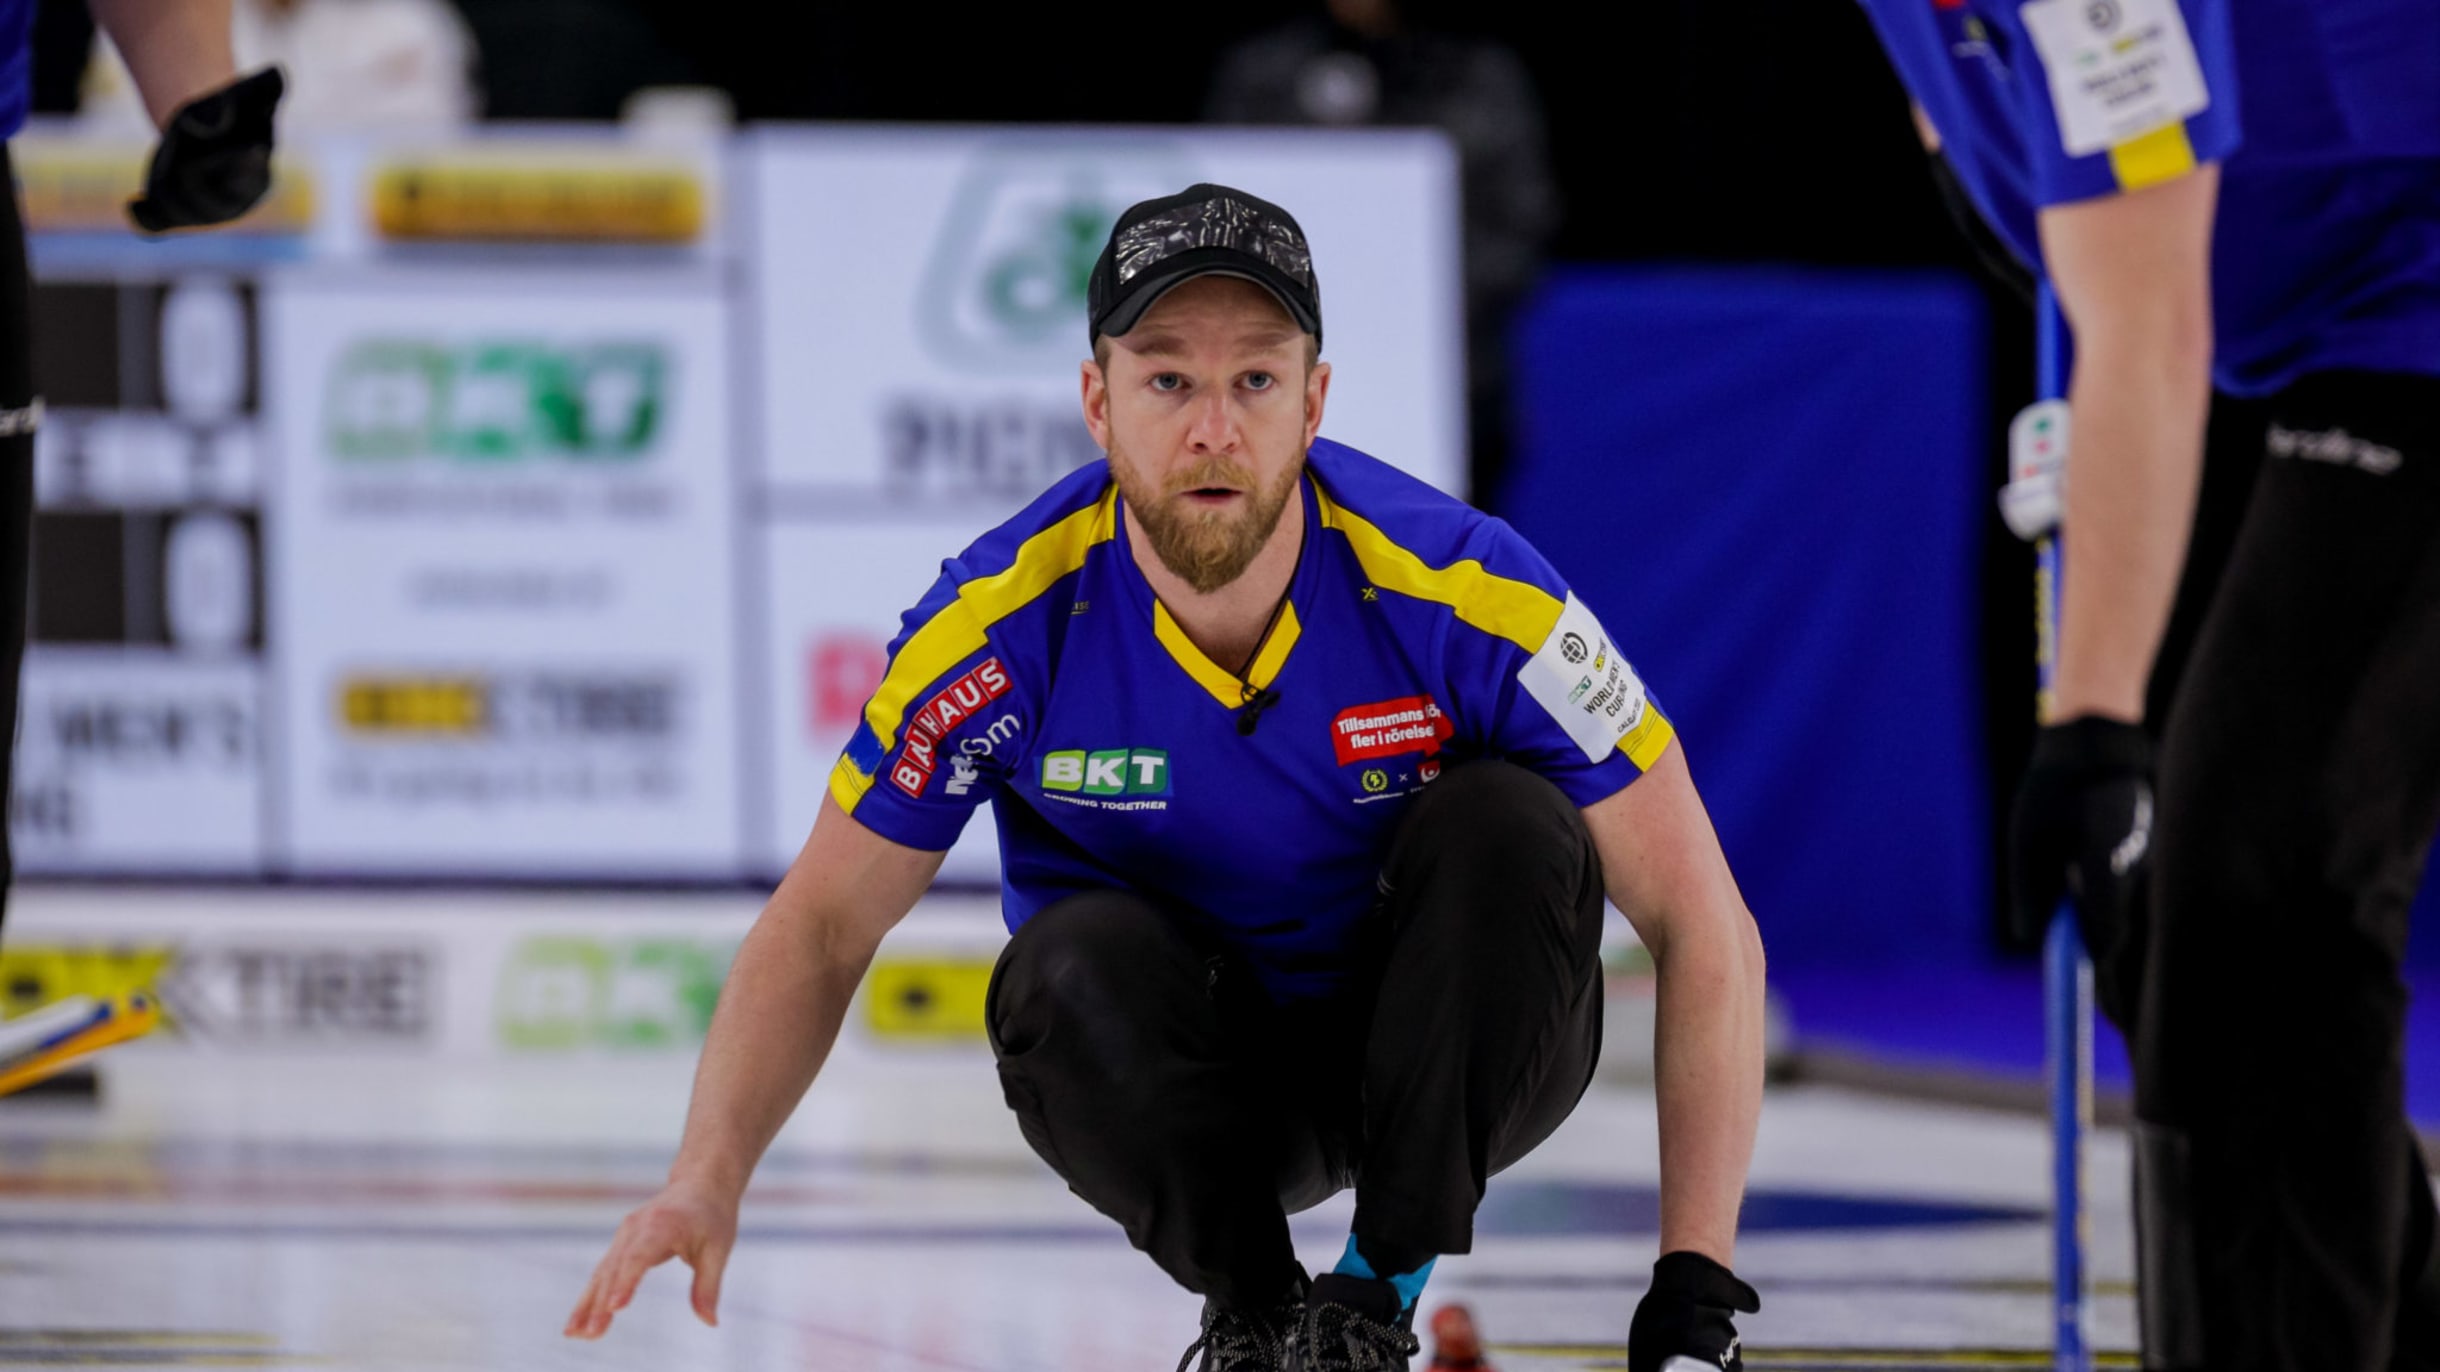 Niklas Edin Swedish curling skip missing just Olympic gold for full set